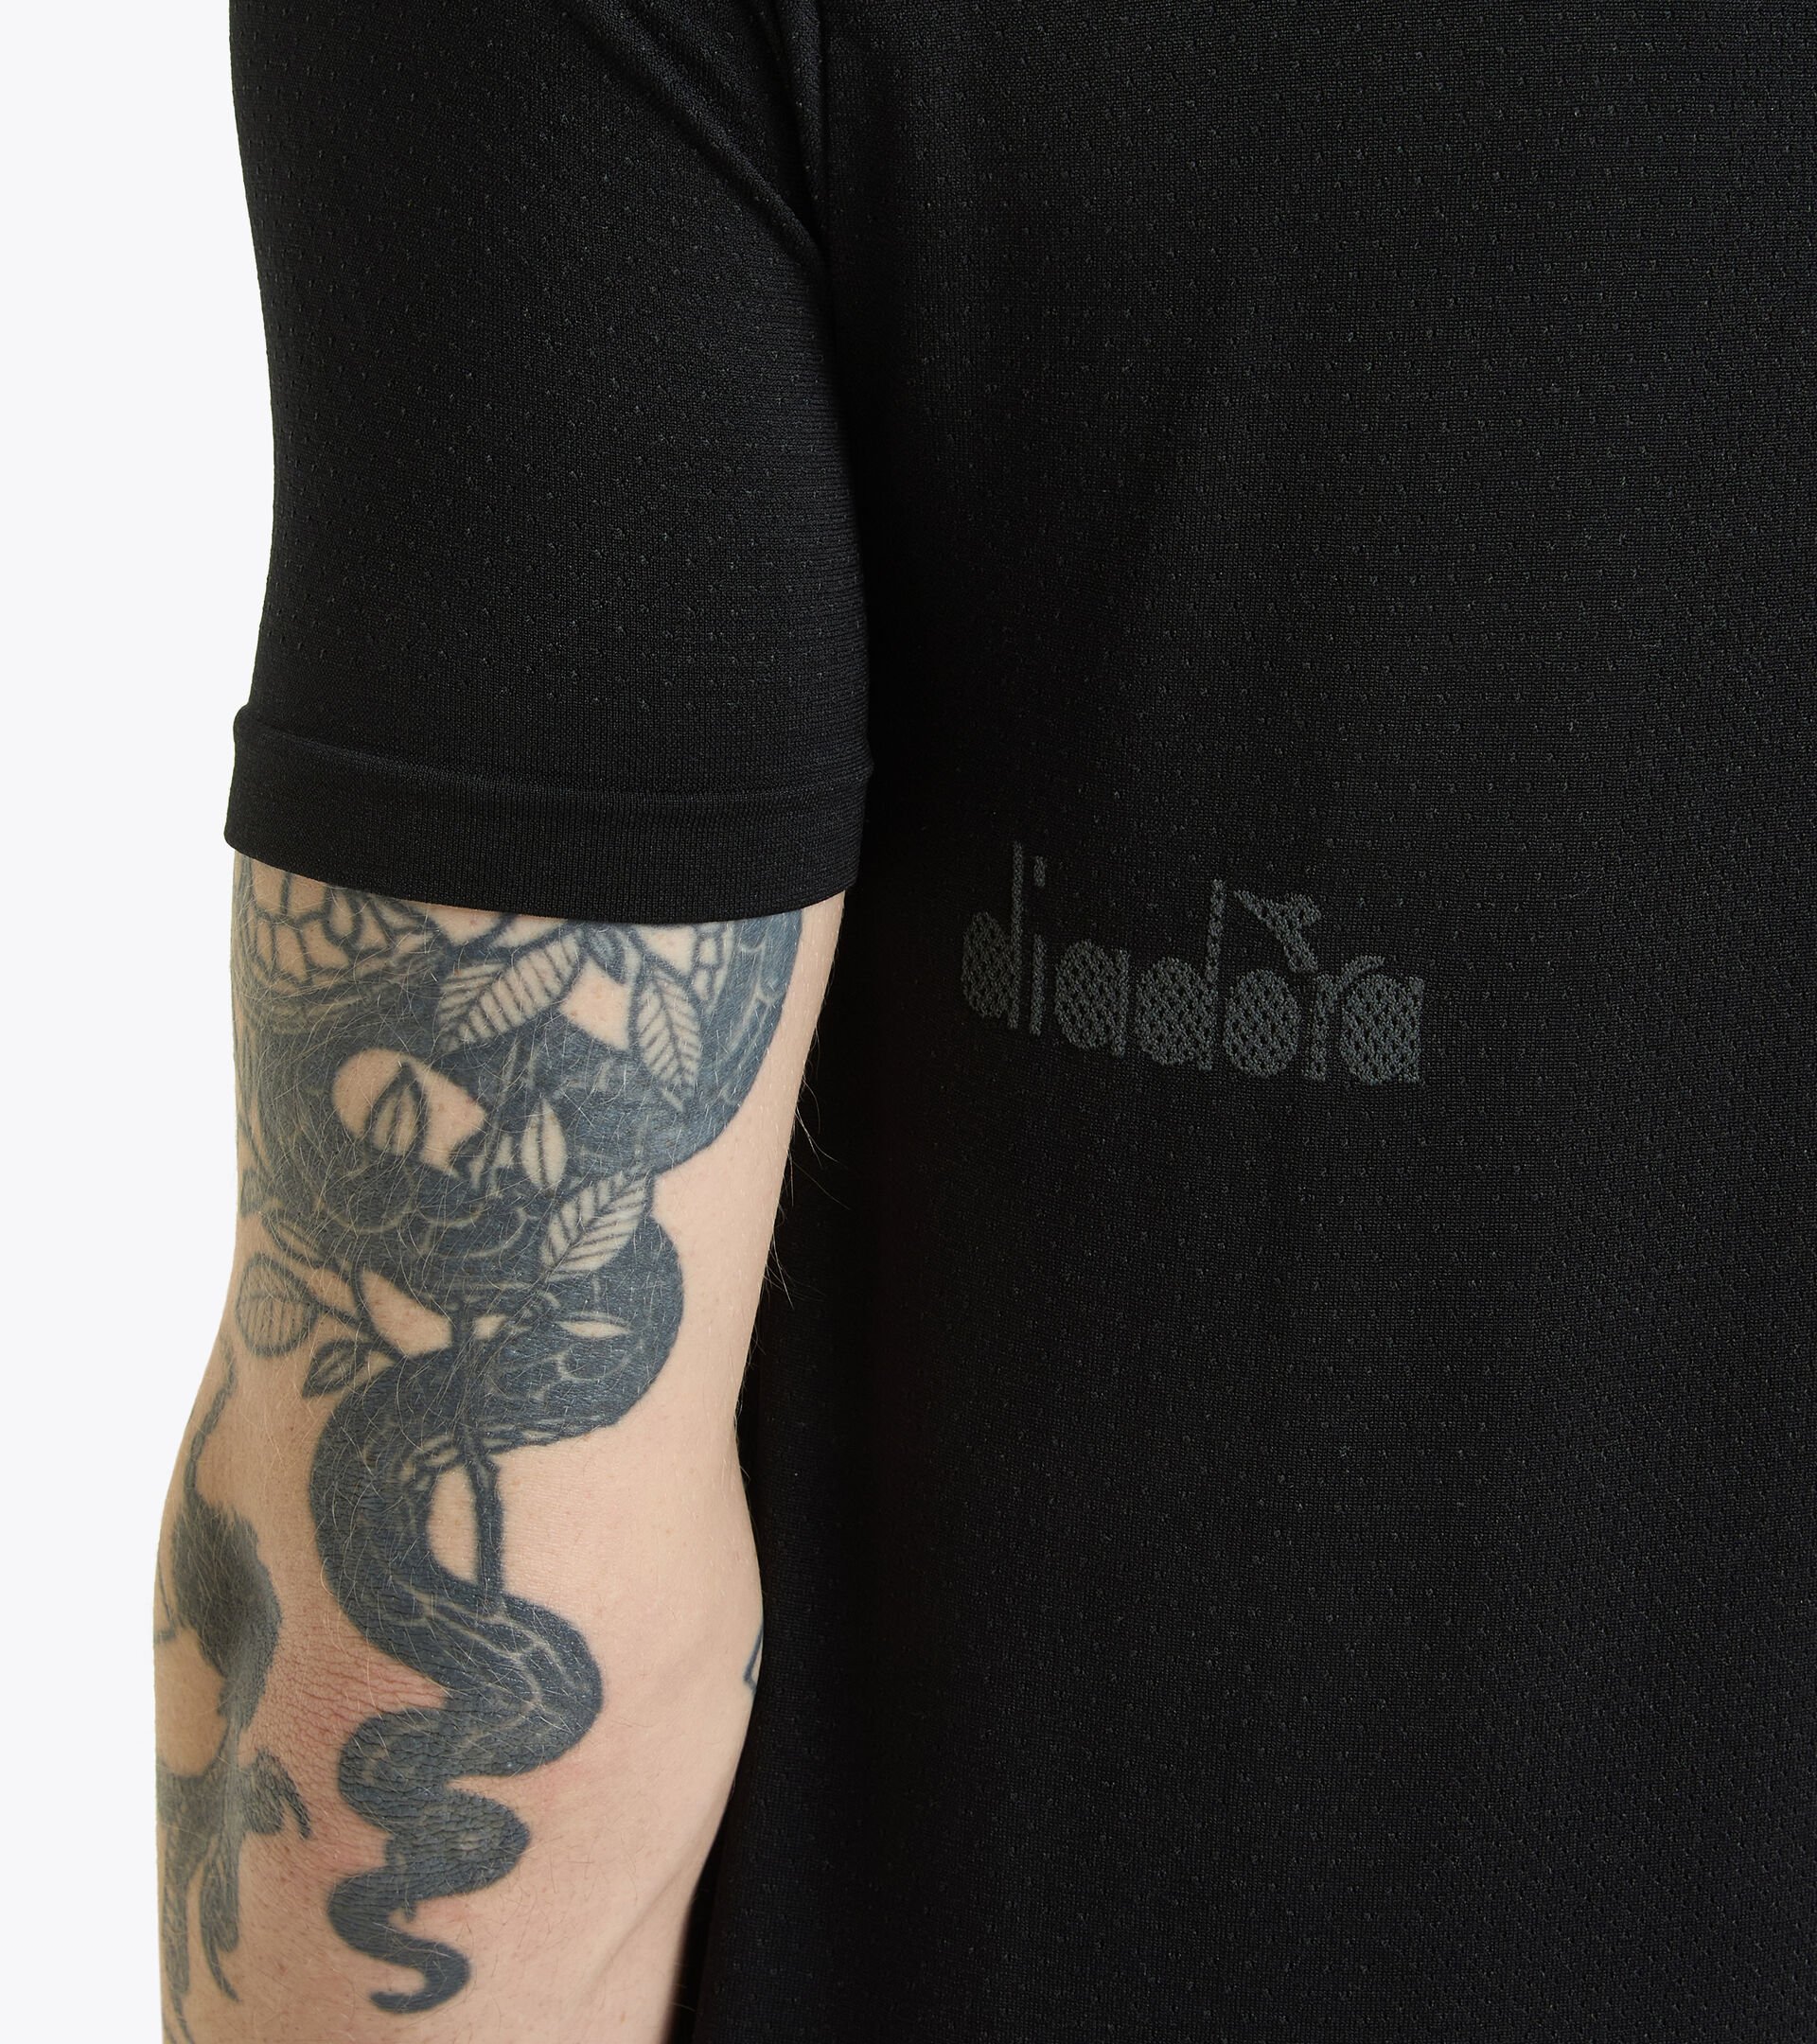 Seamless running t-shirt - Made in Italy - Men’s SS T-SHIRT SKIN FRIENDLY BLACK - Diadora